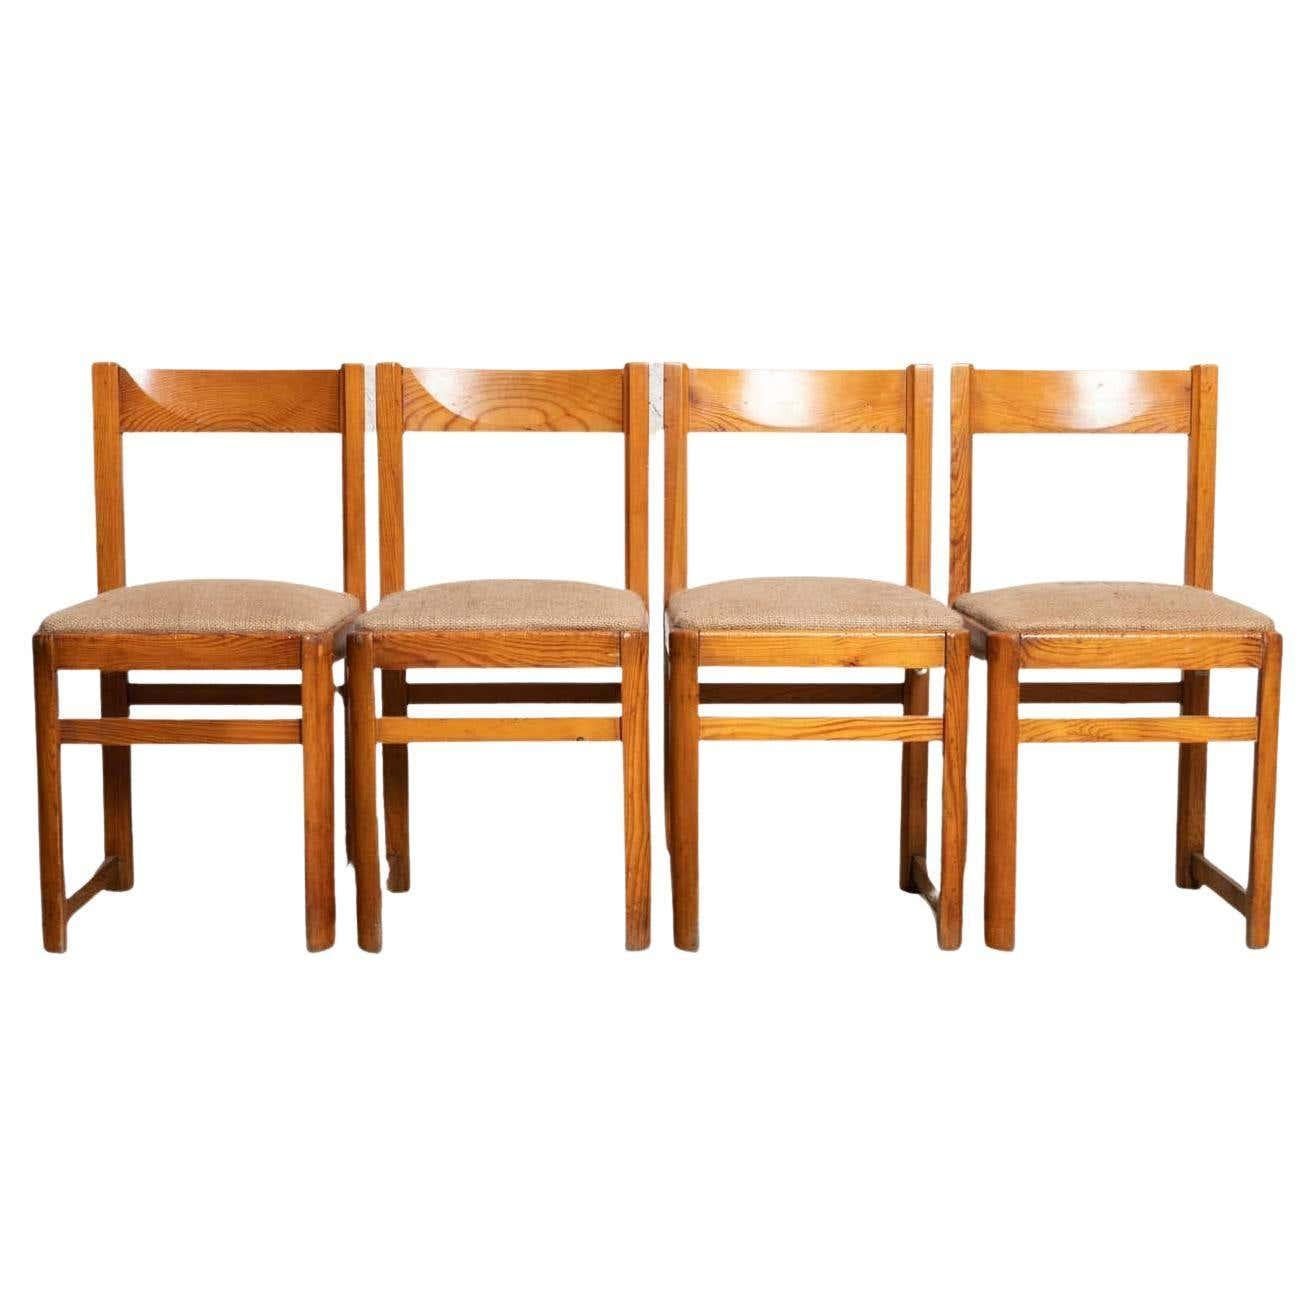 Set of 4 Chairs Jordi Vilanova Aran Chairs, circa 1960 For Sale 9